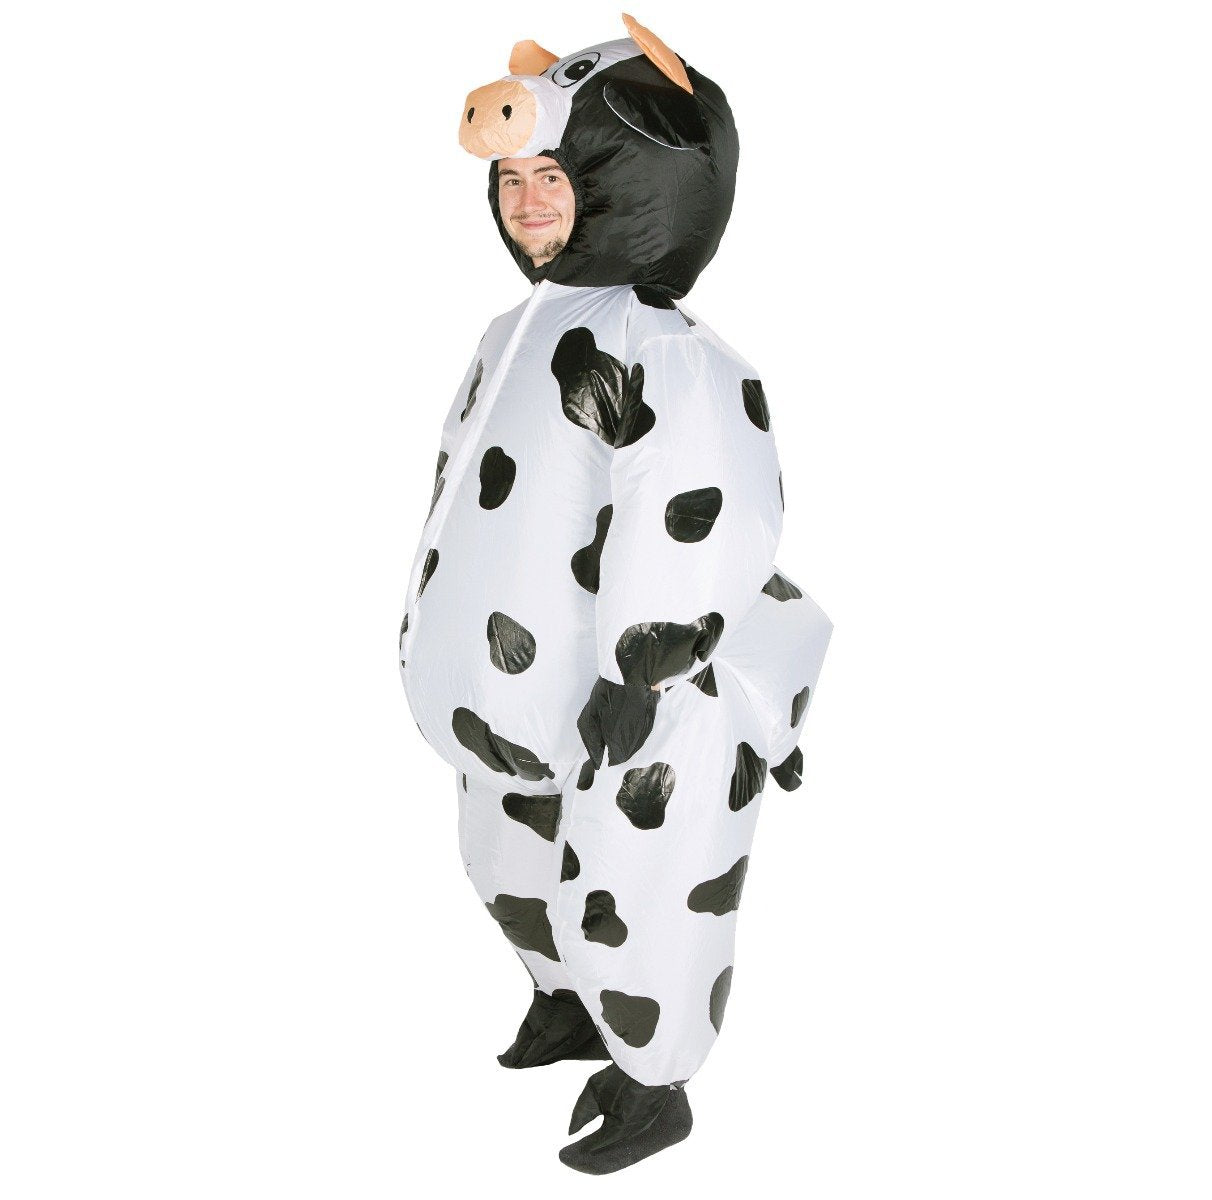 Bodysocks - Inflatable Cow Costume